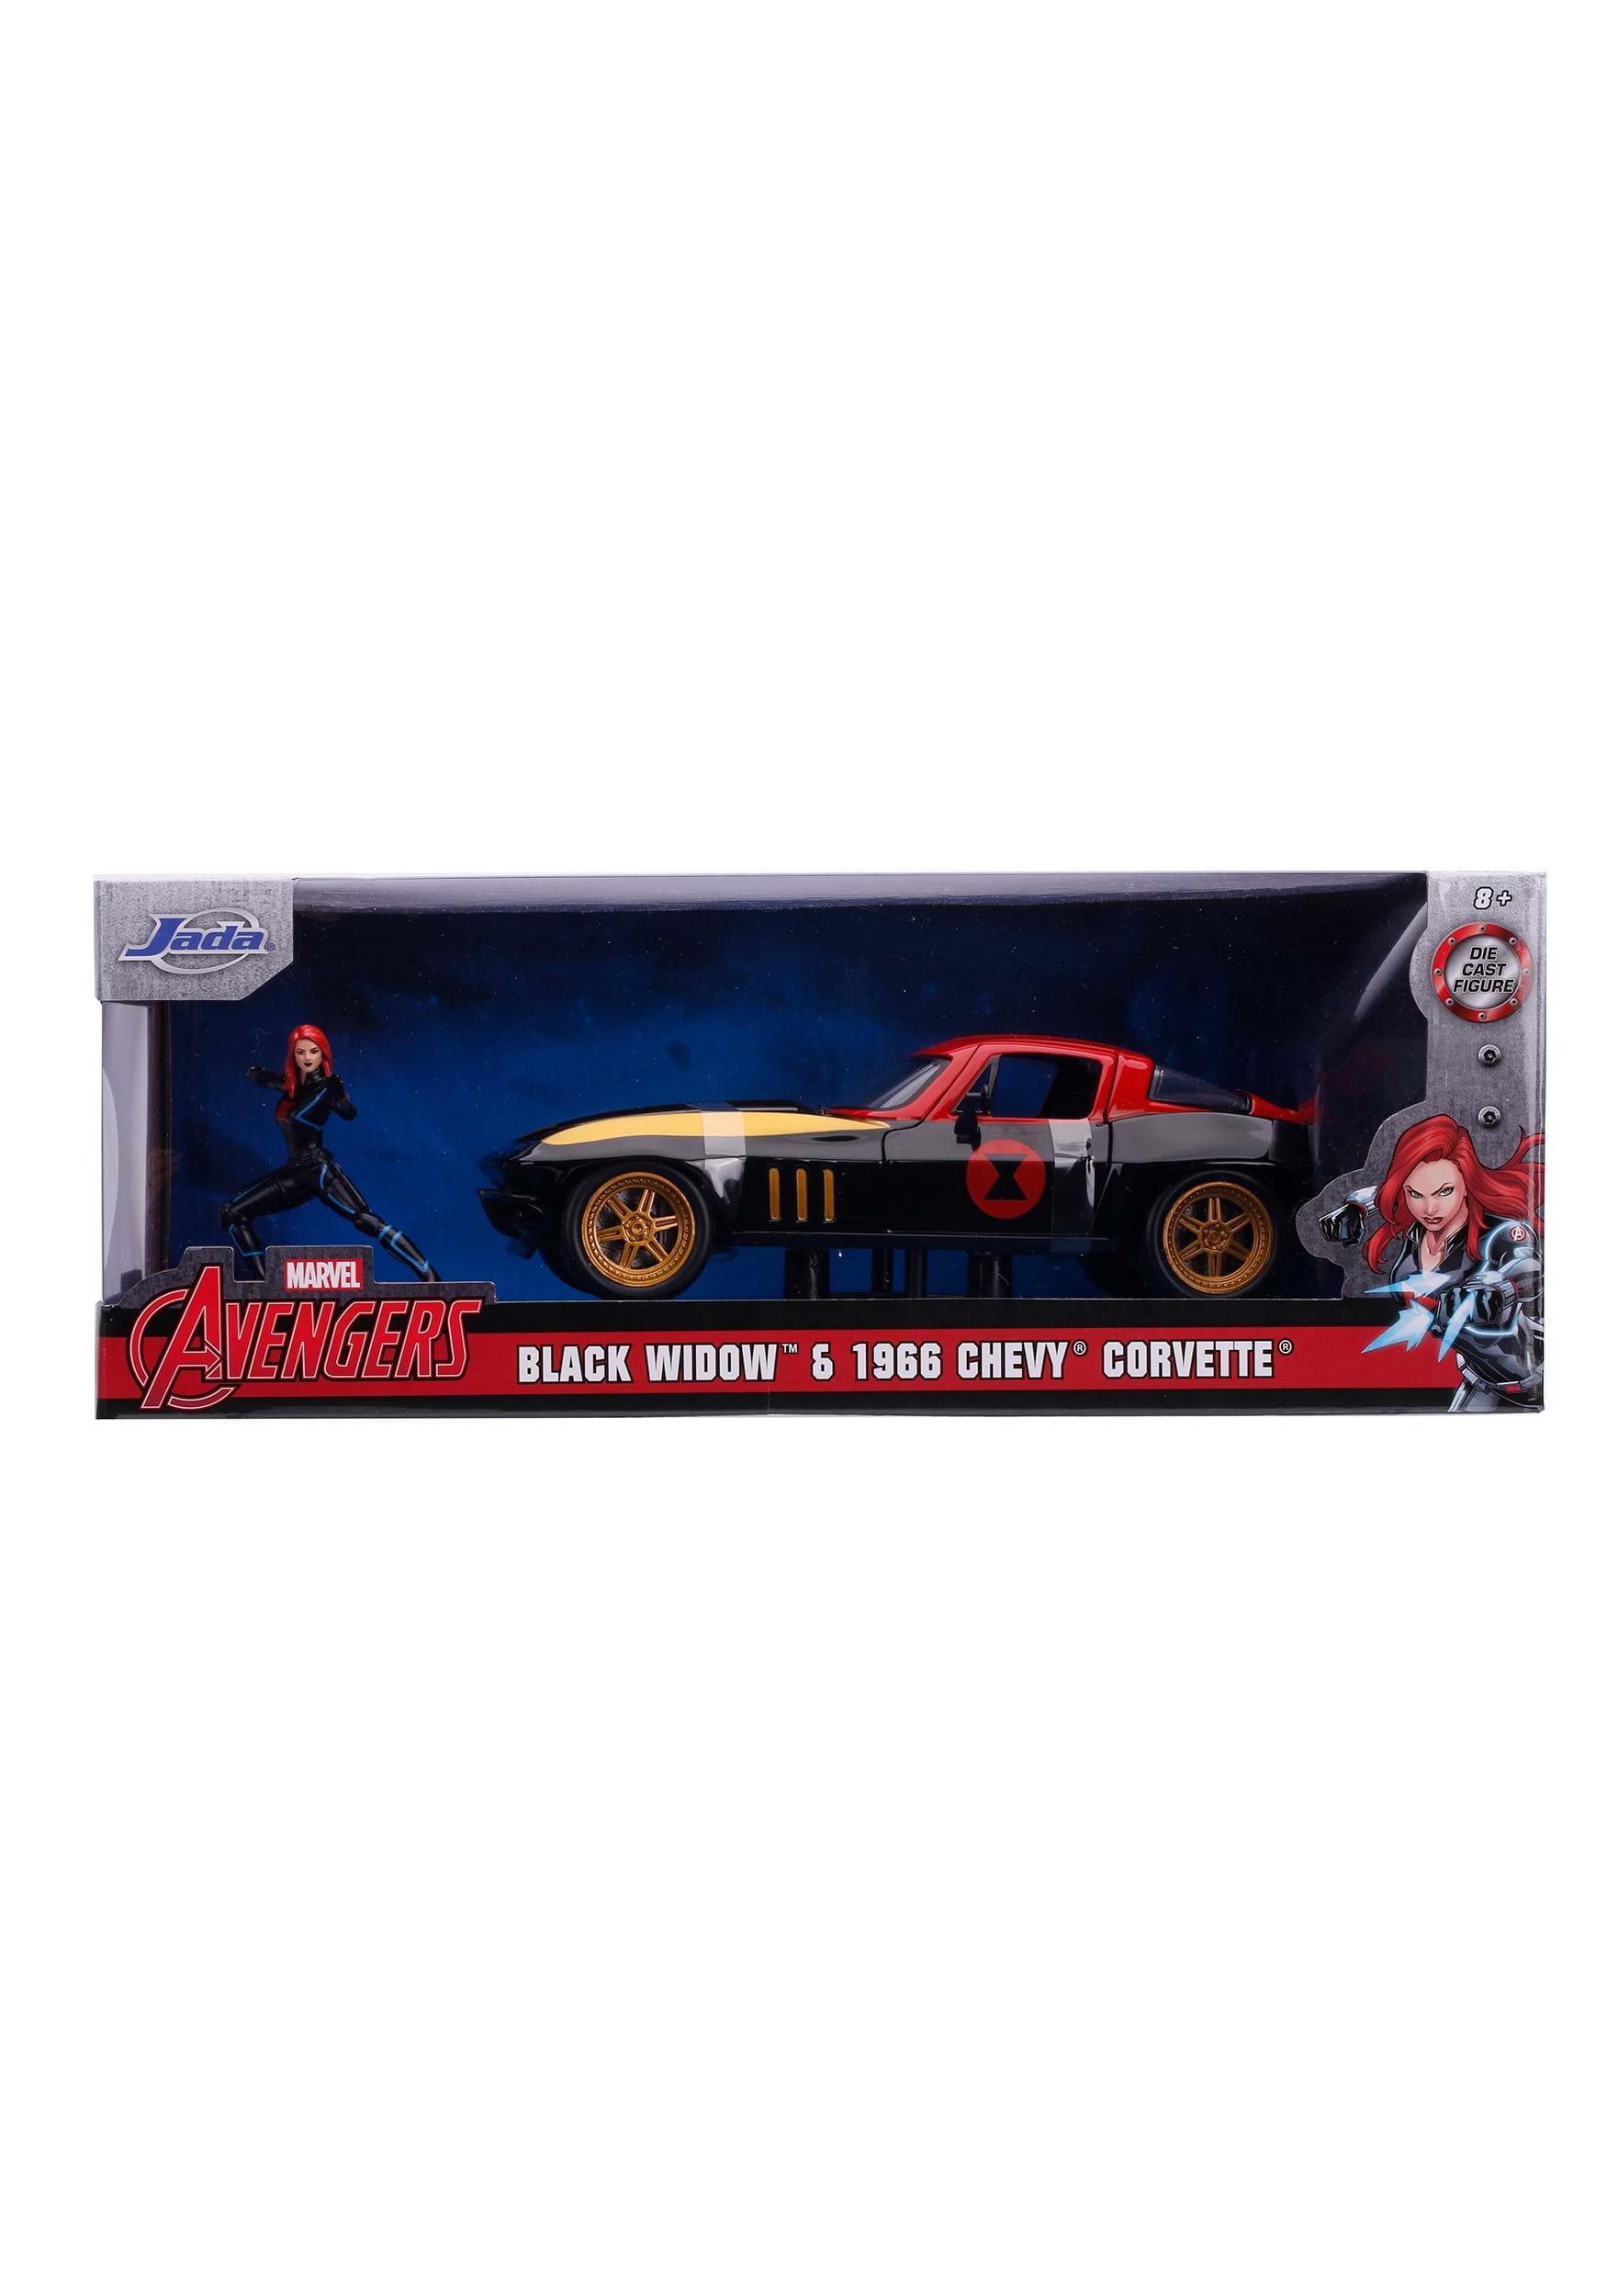 1:24 Scale '66 Chevy Corvette W/ Marvel Black Widow Figure